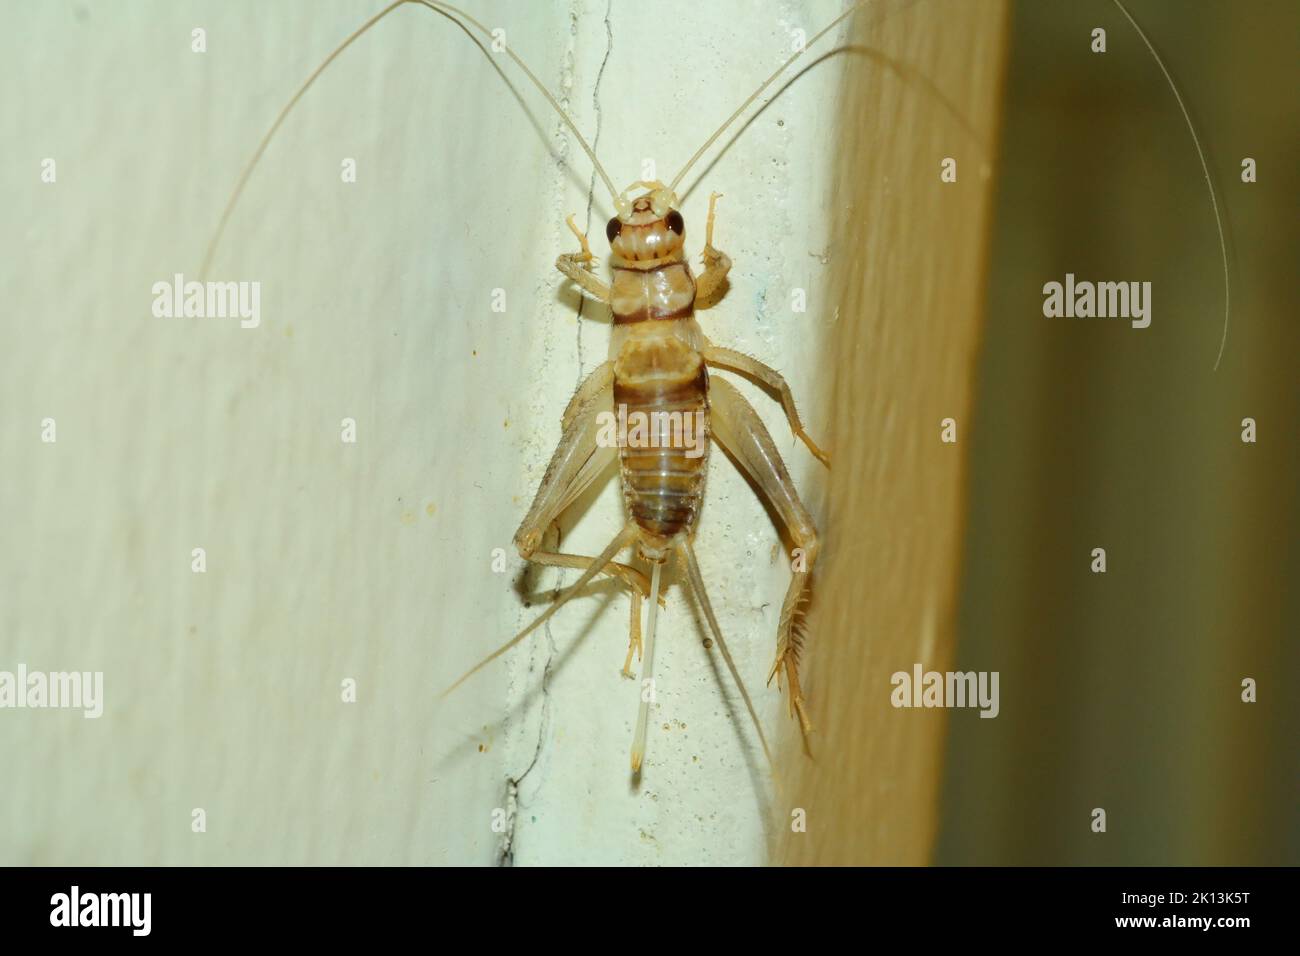 A creepy Tropical house cricket (Gryllodes sigillatus) crawling on the wall Stock Photo